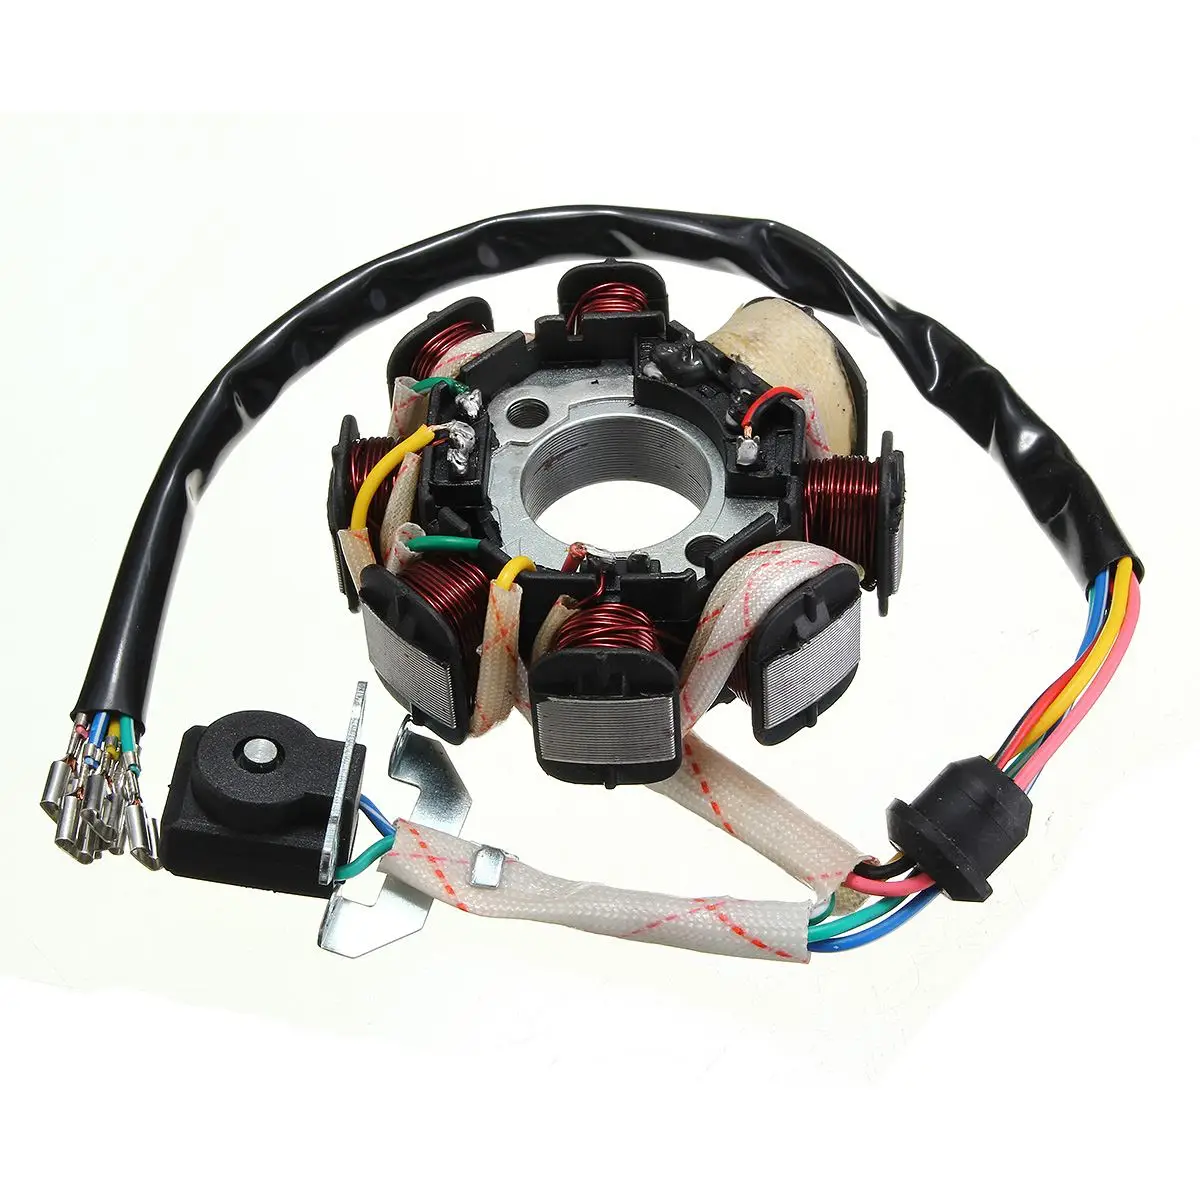 

Universal CDI Ignition Wire Harness Assembly Electric Starter Plug Control Switch 125cc 150cc 200cc 250cc Dirt Bike ATV Quad